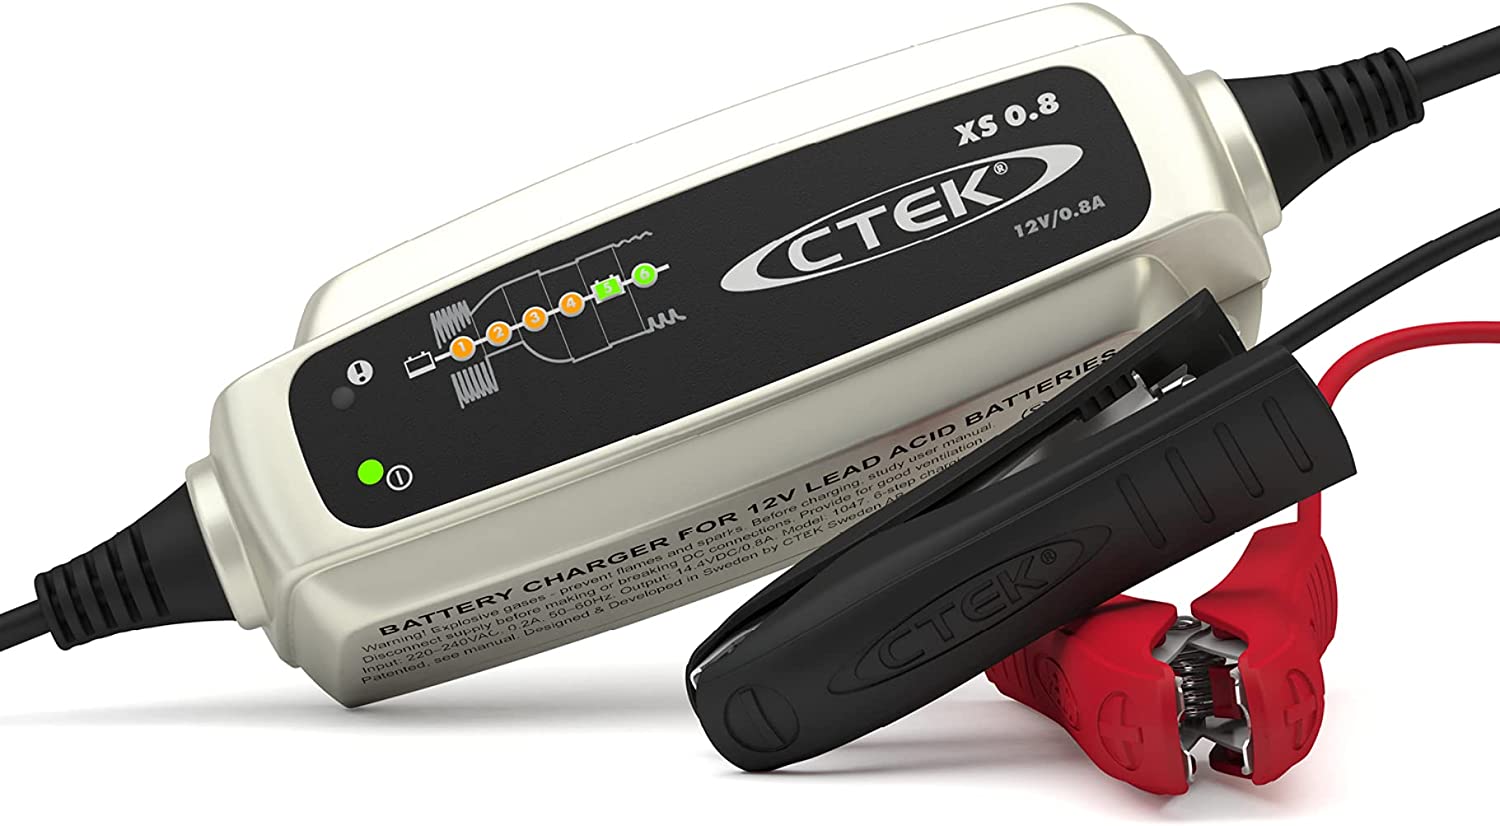 CTEK XS 0.8 - Der kompakte Batterielader mit EU-Steckdose